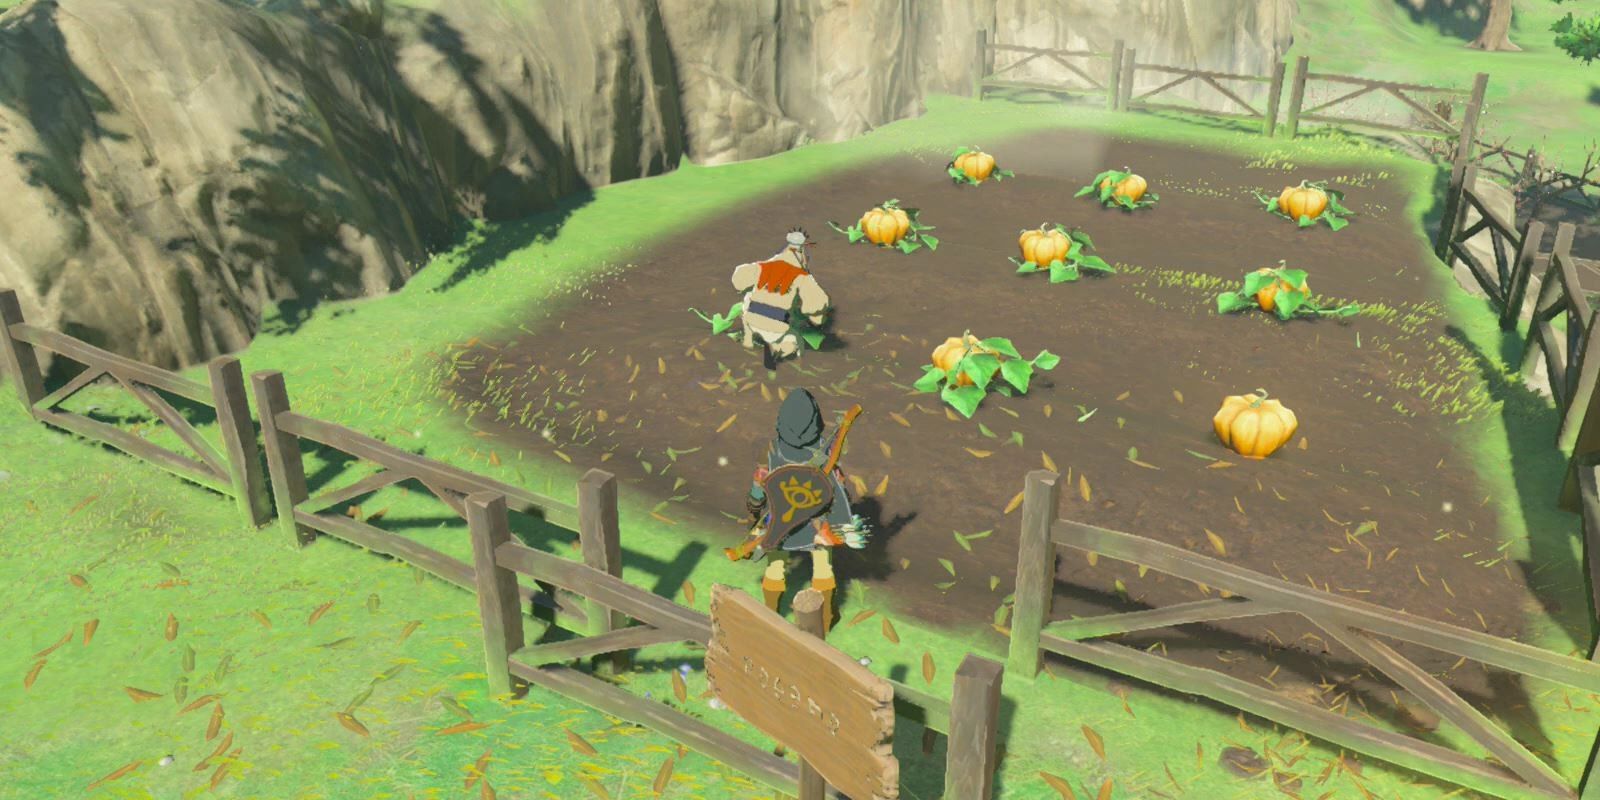 Olkin tending to his Fortified Pumpkins in The Legend of Zelda: Breath of the Wild.